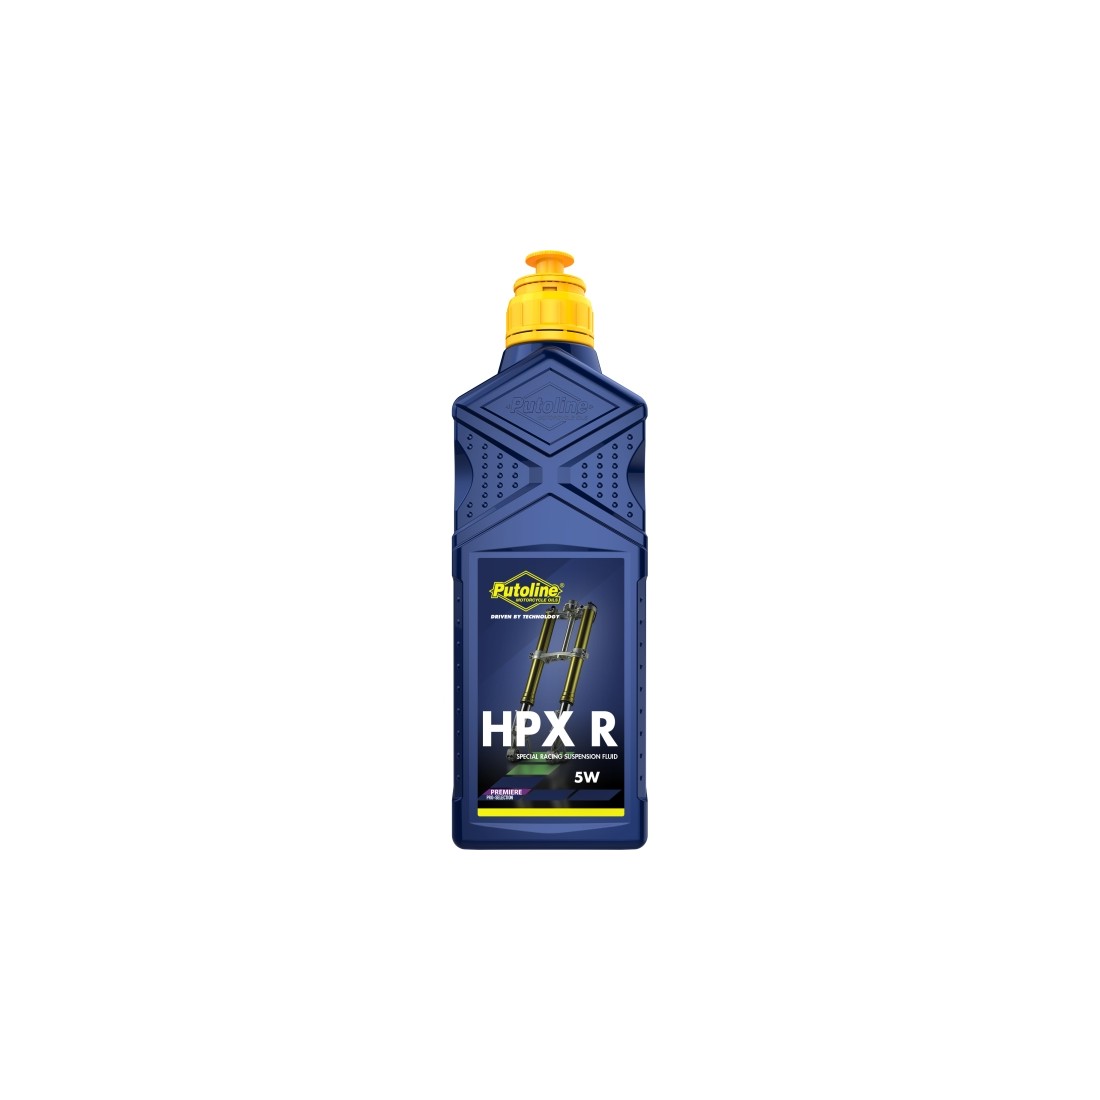 Putoline HPX R 5W 1L